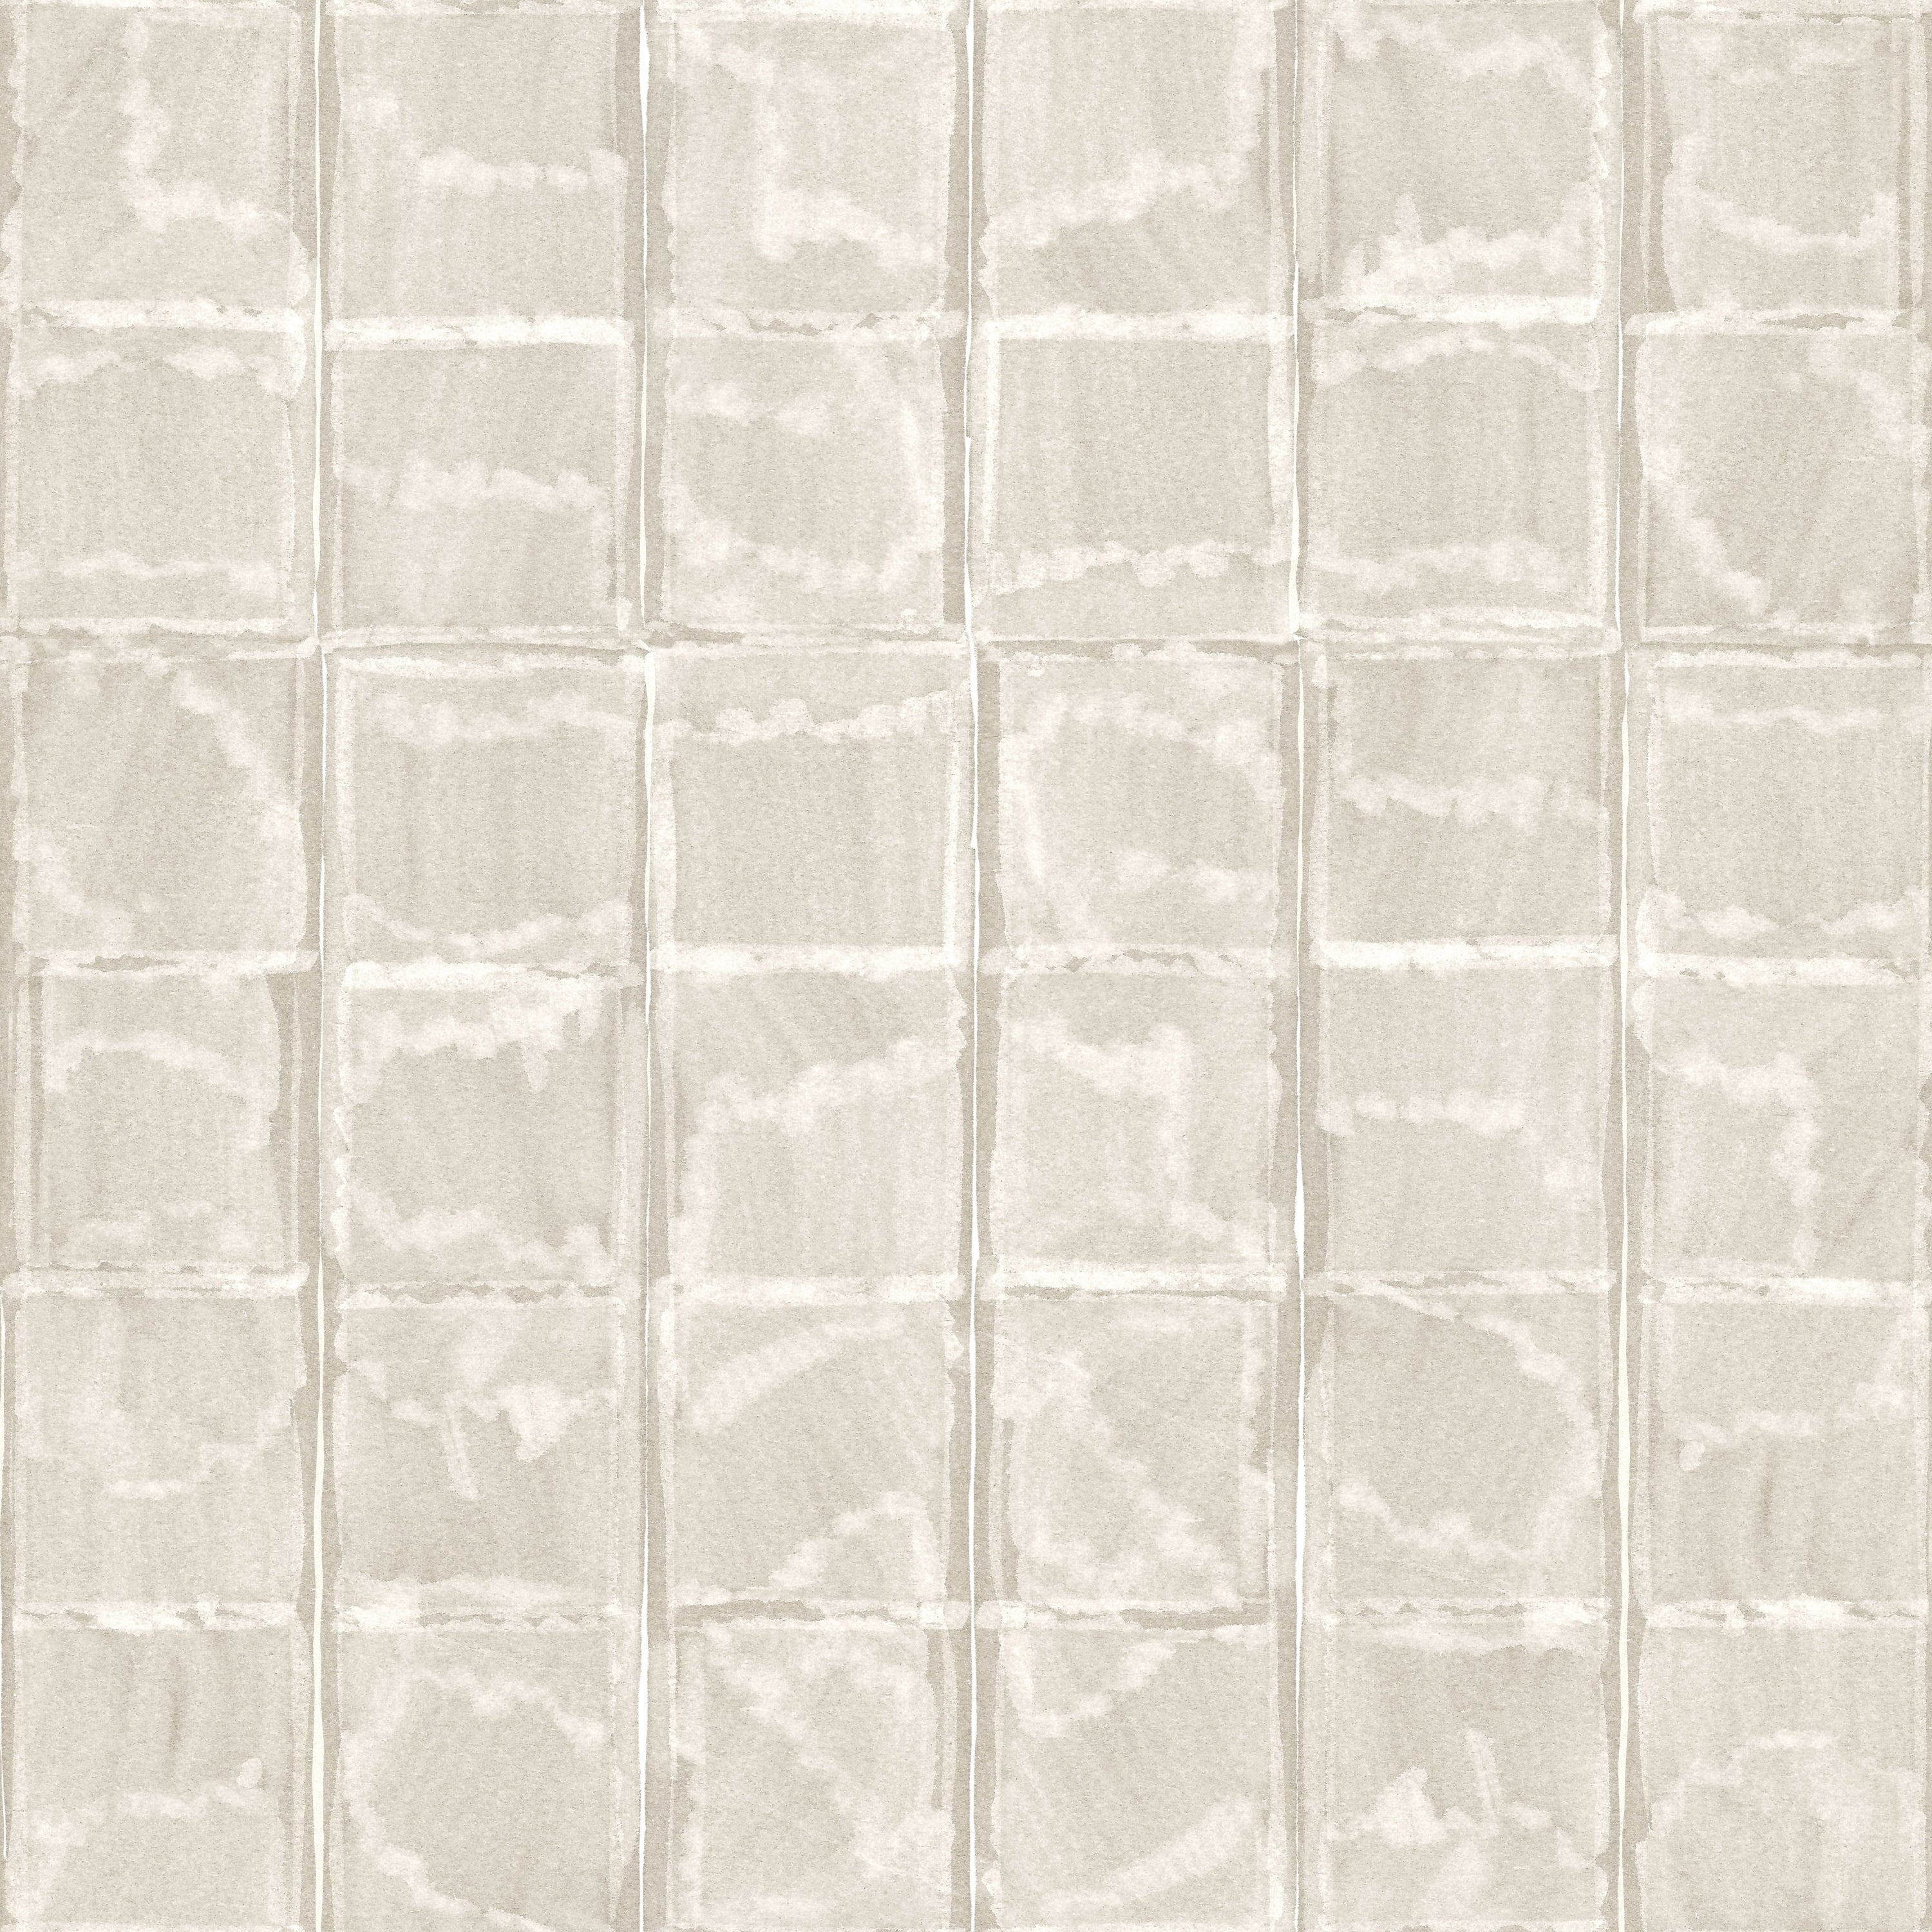 Detail of wallpaper in a textural block print in mottled tan.